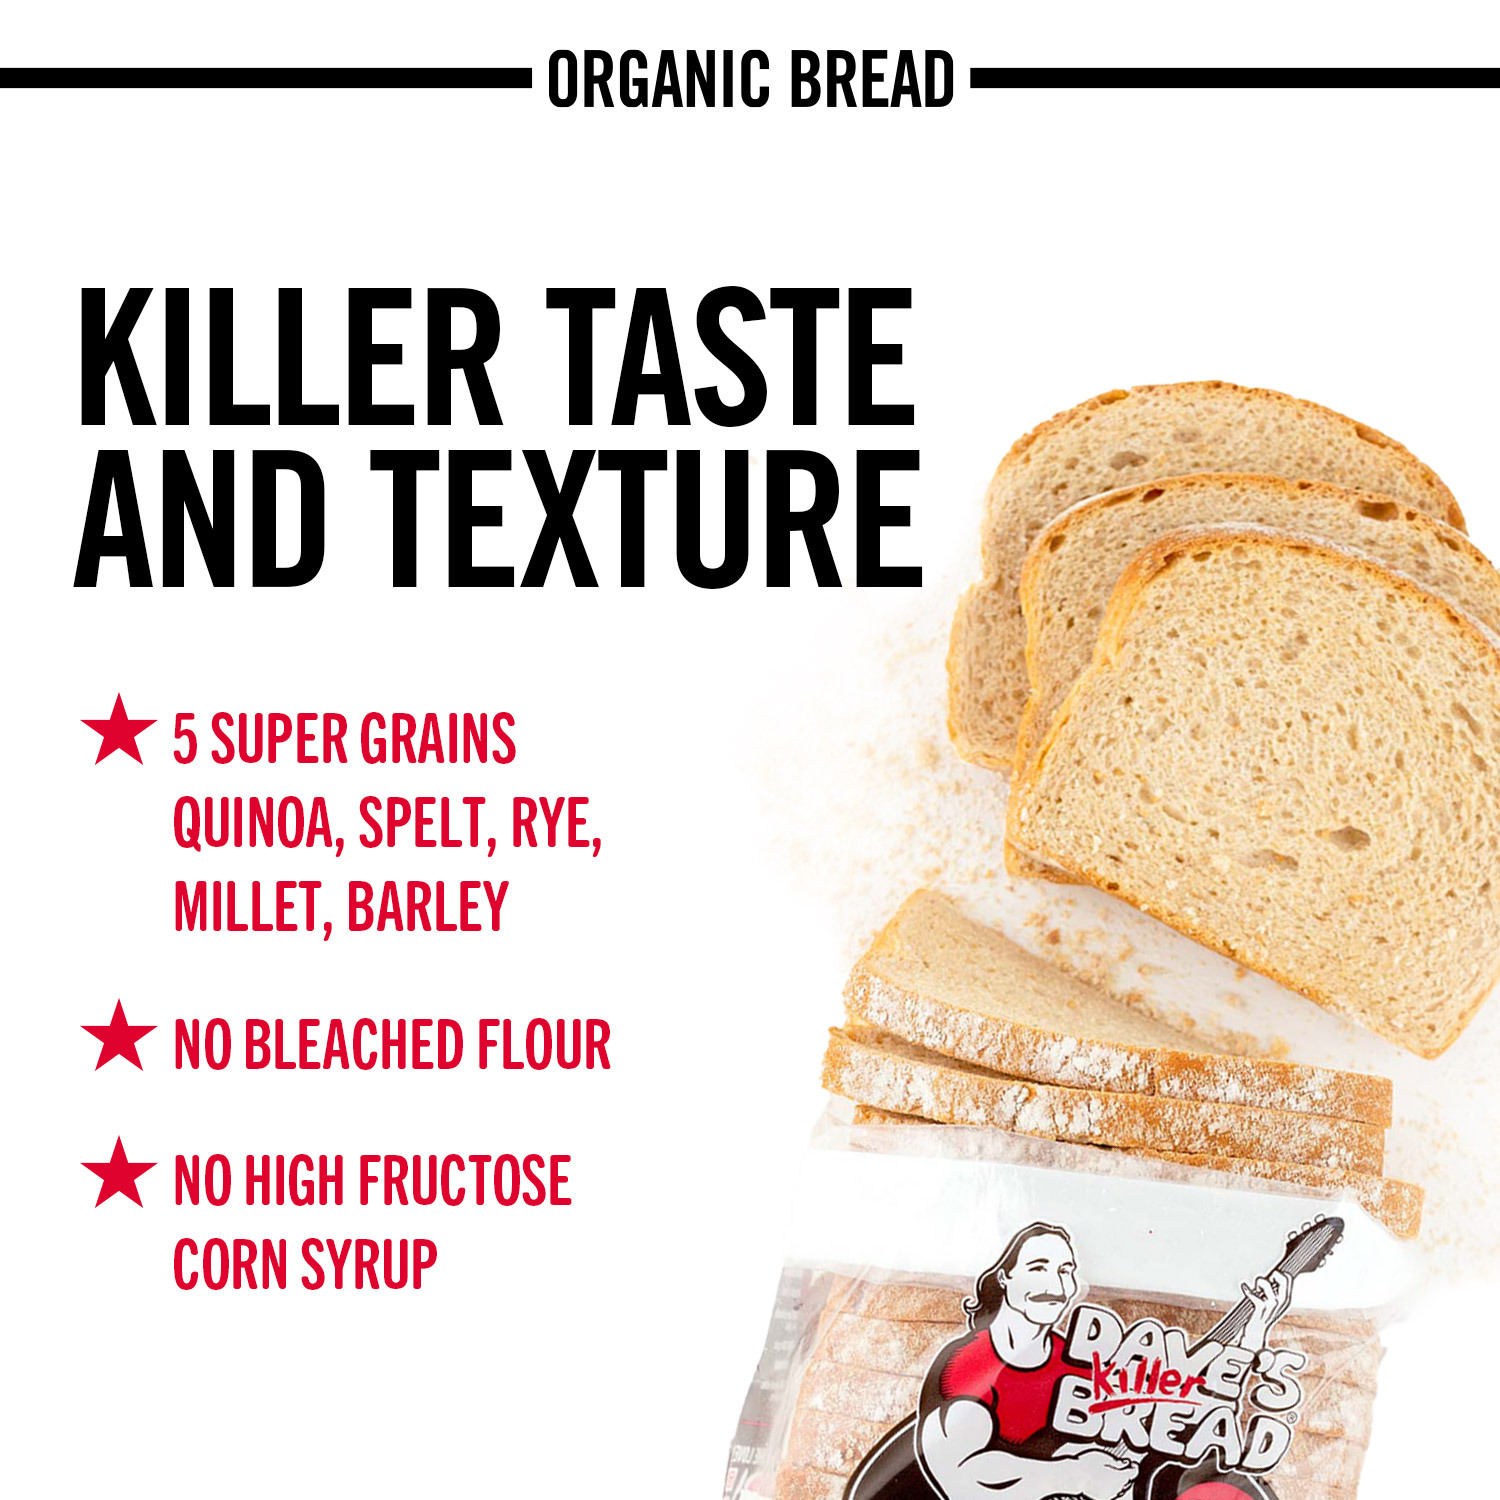 Dave's Killer Bread White Bread Done Right Organic Bread Loaf, 24 oz - image 2 of 15